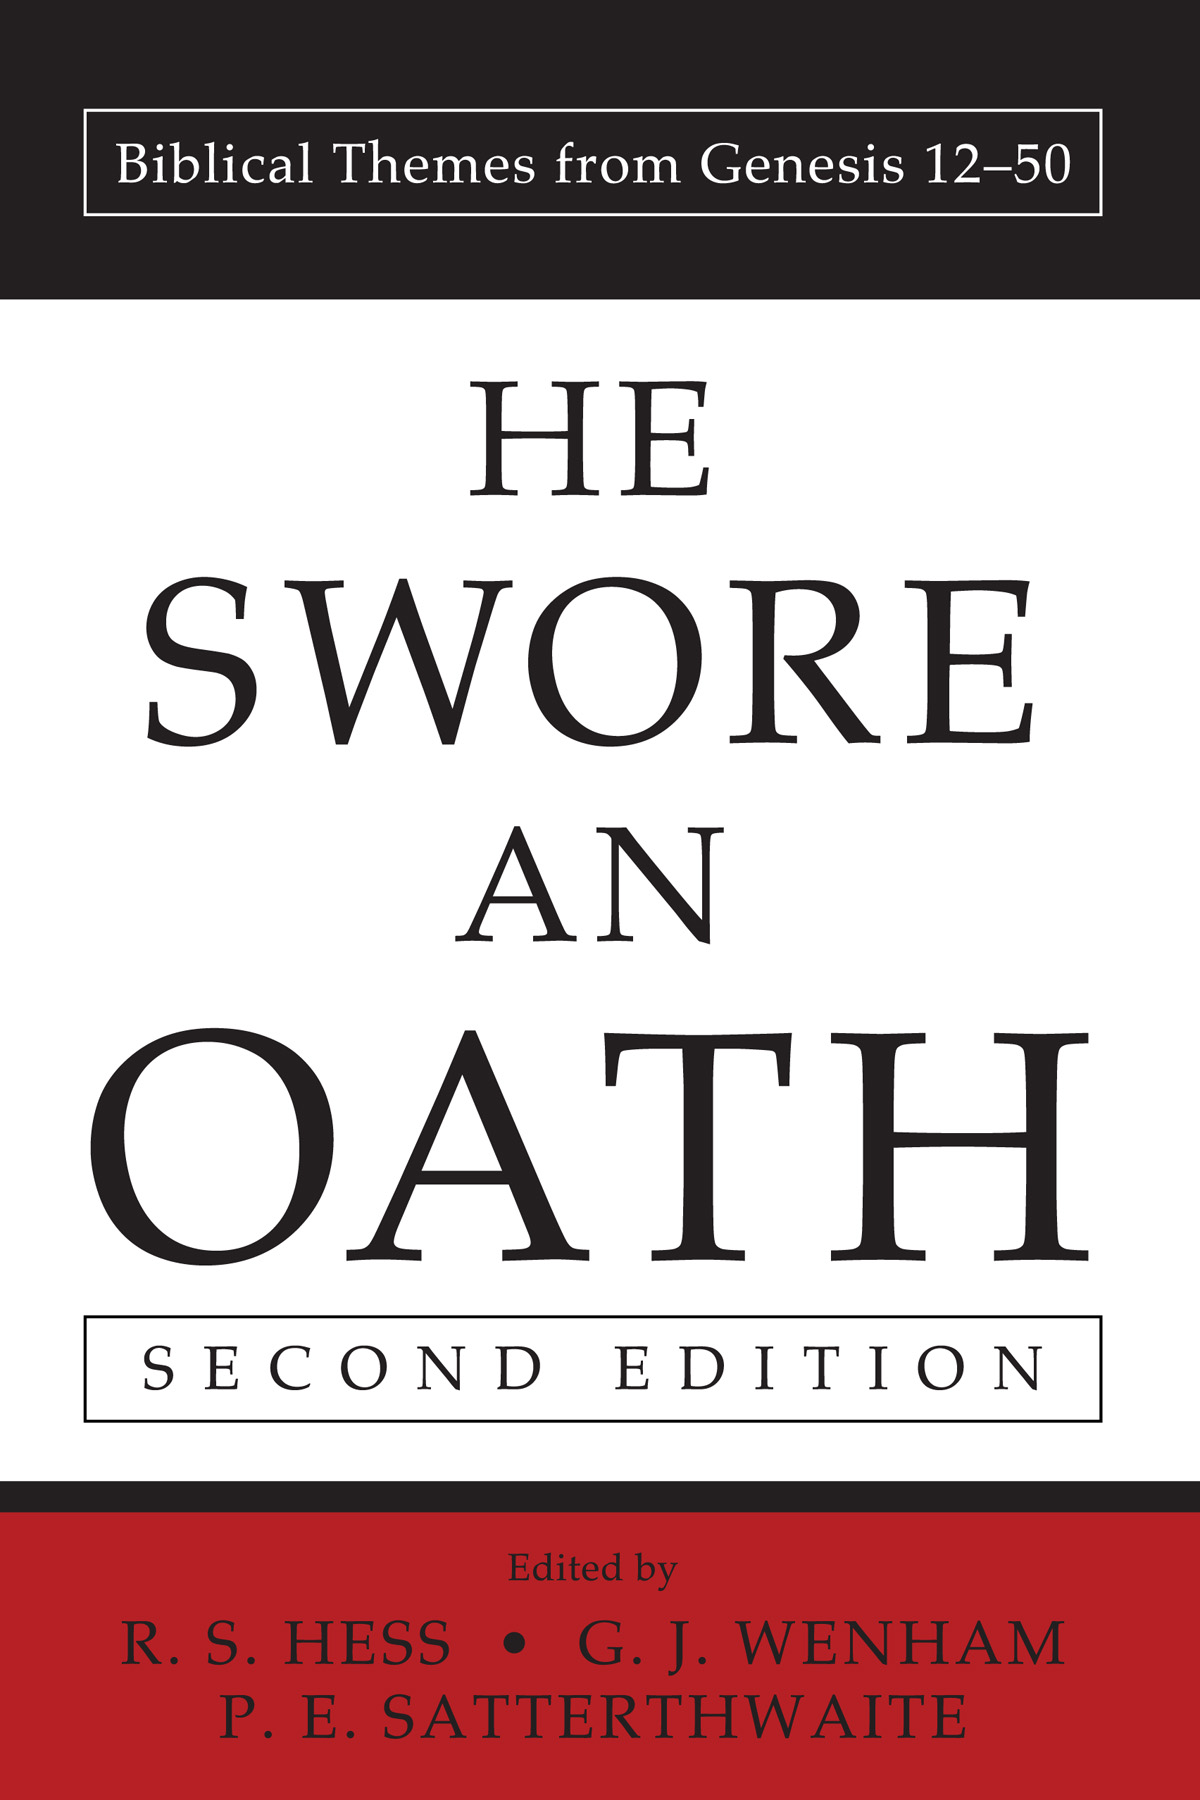  He Swore an Oath: Biblical Themes from Genesis 12-50